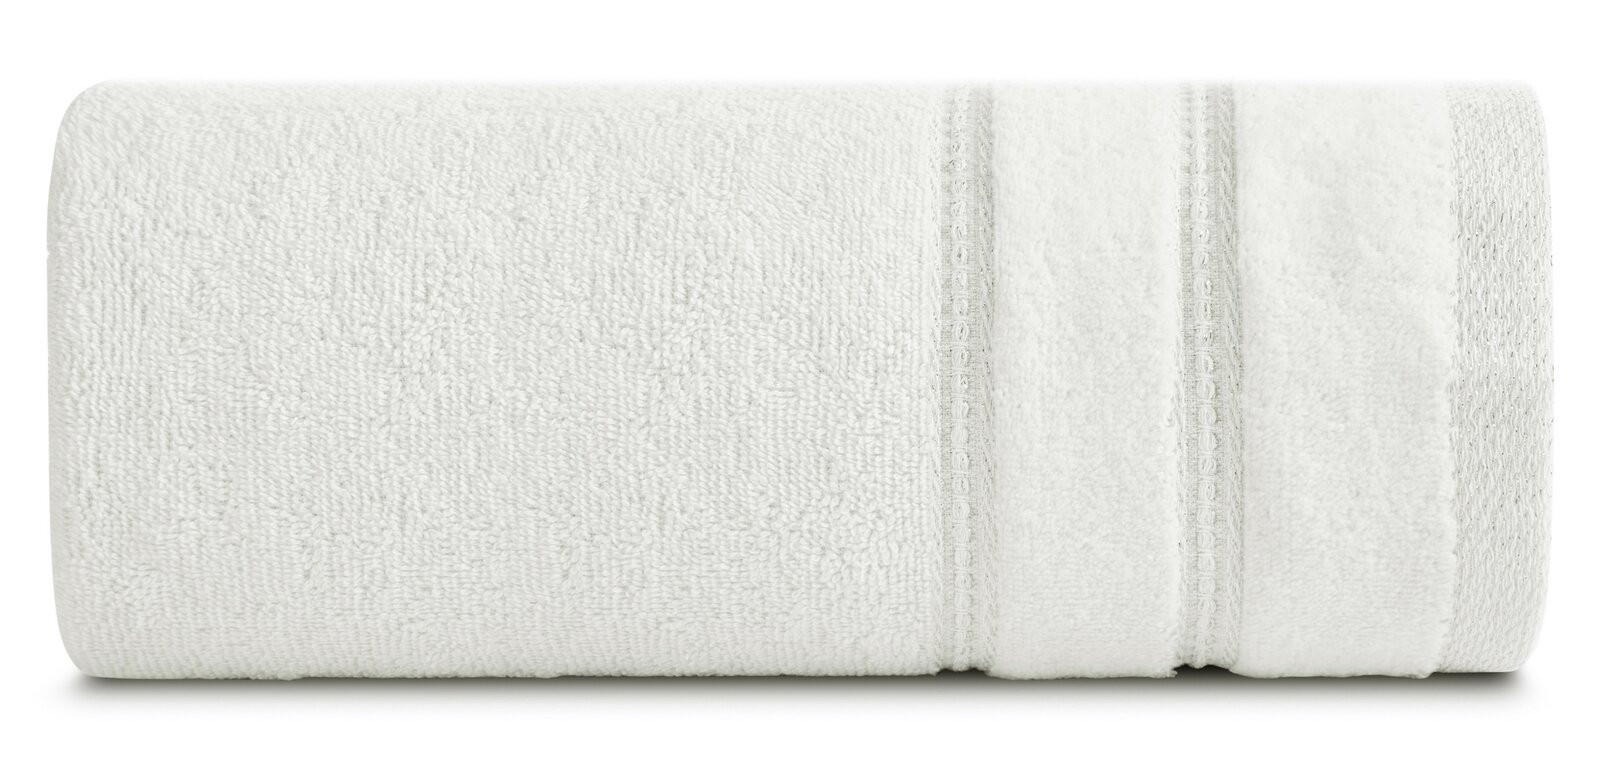 Sada ručníků GLORY 4 01 bílá